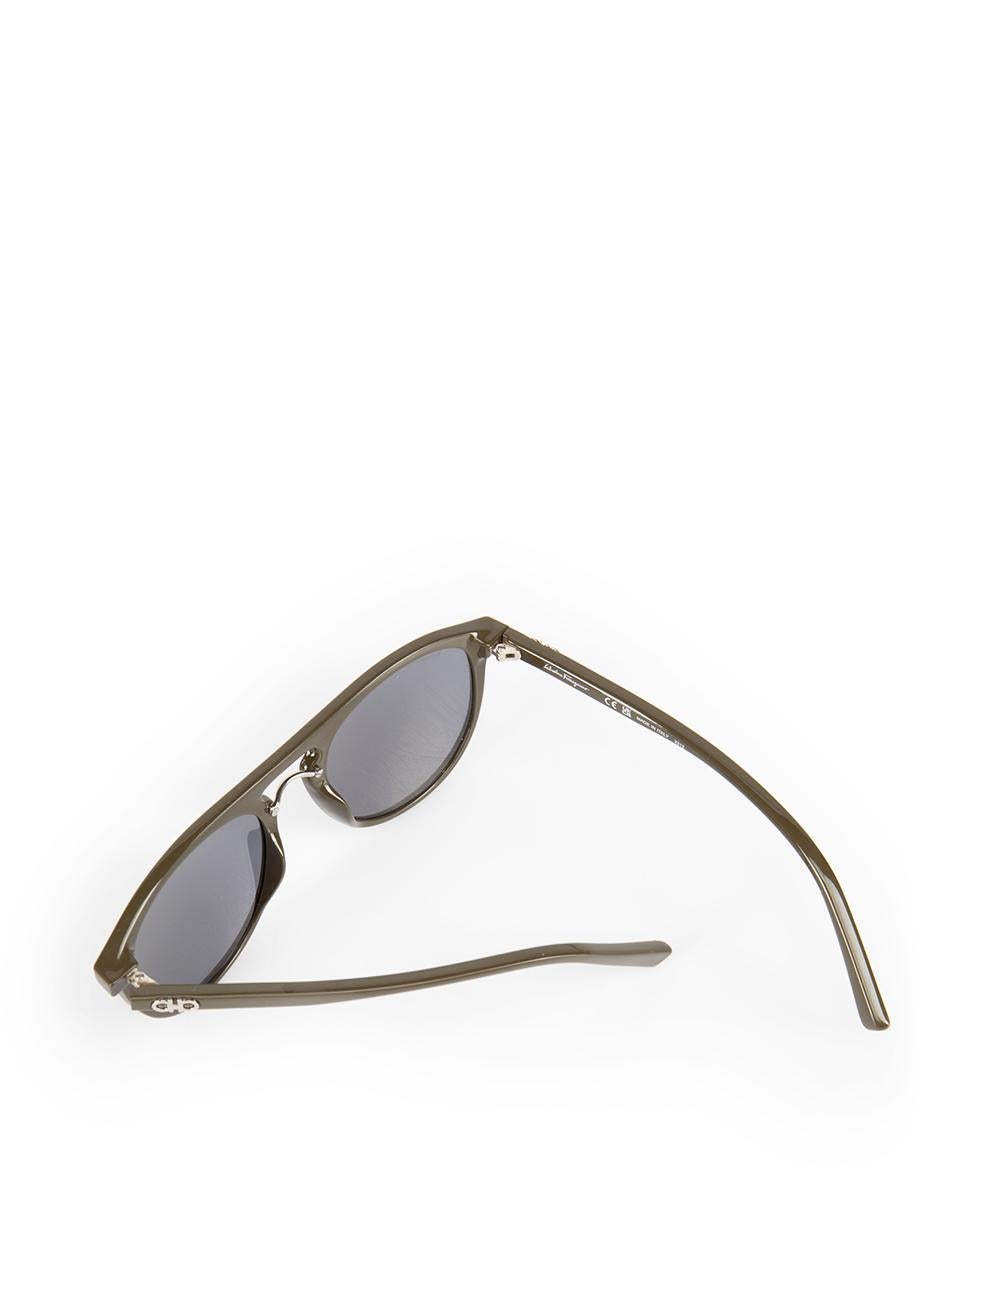 Salvatore Ferragamo Dark Khaki Aviator Sunglasses For Sale 2